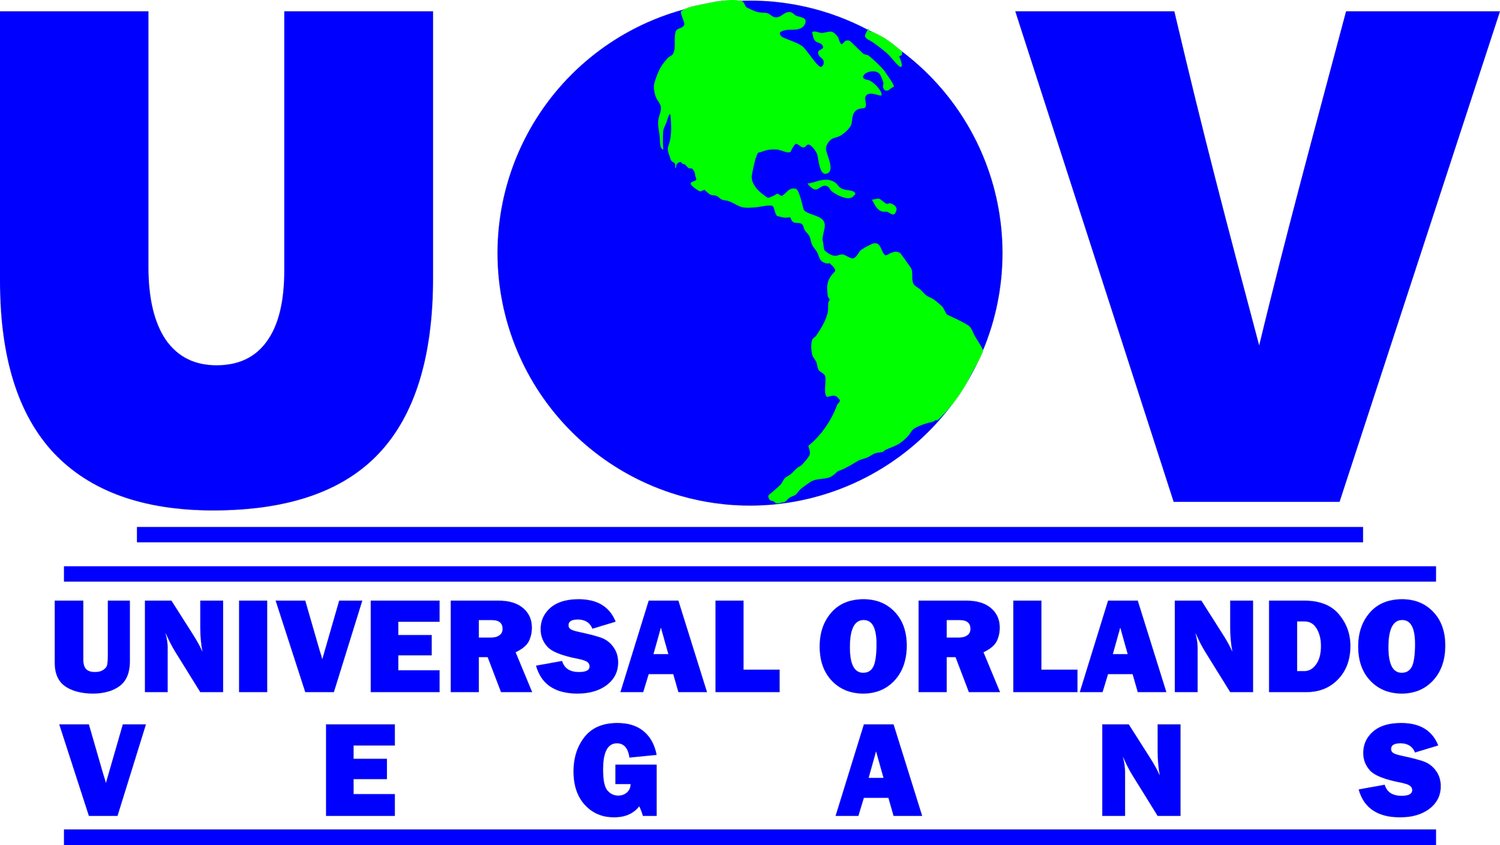 Universal Orlando Vegans